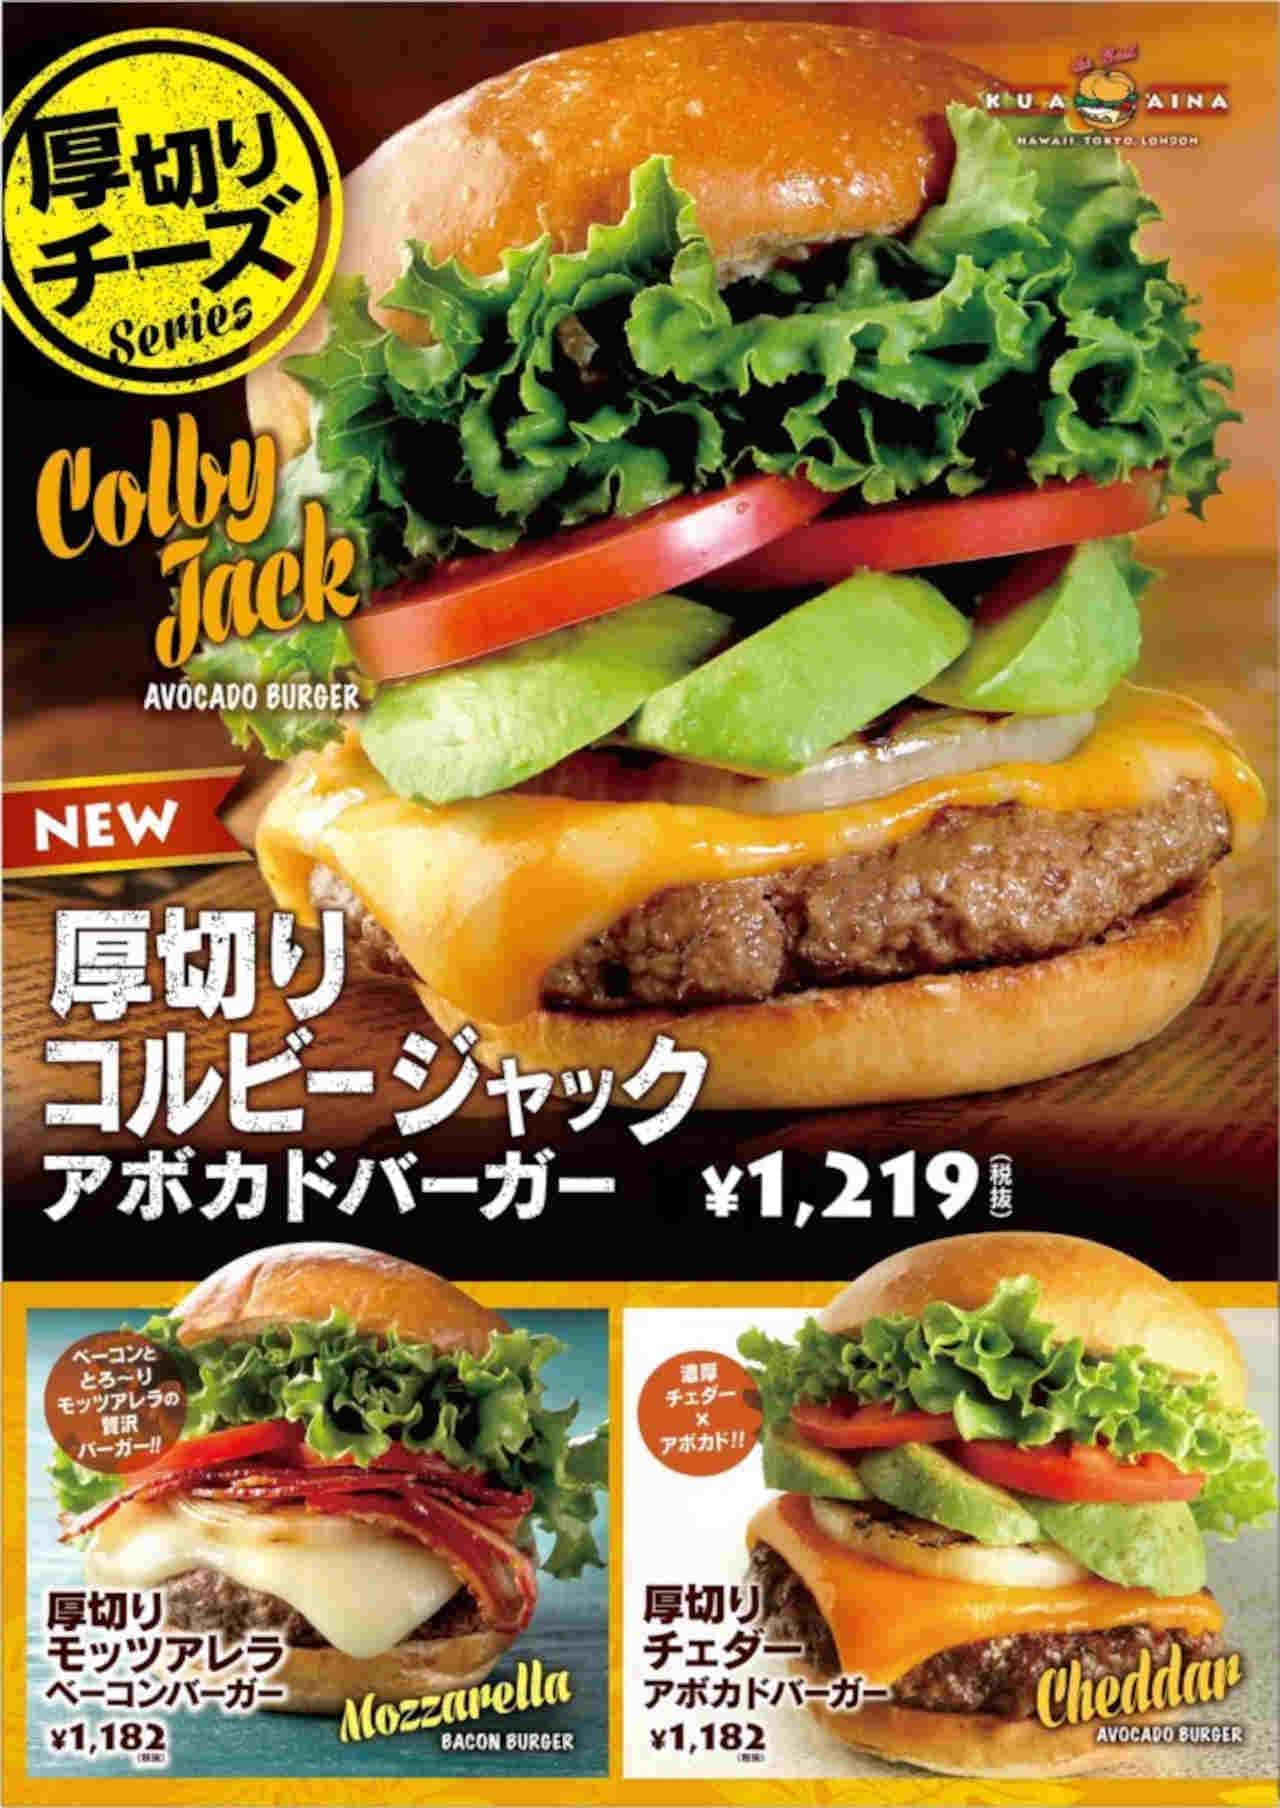 "Thick sliced Colby-Jack avocado burger" for Kur Aina